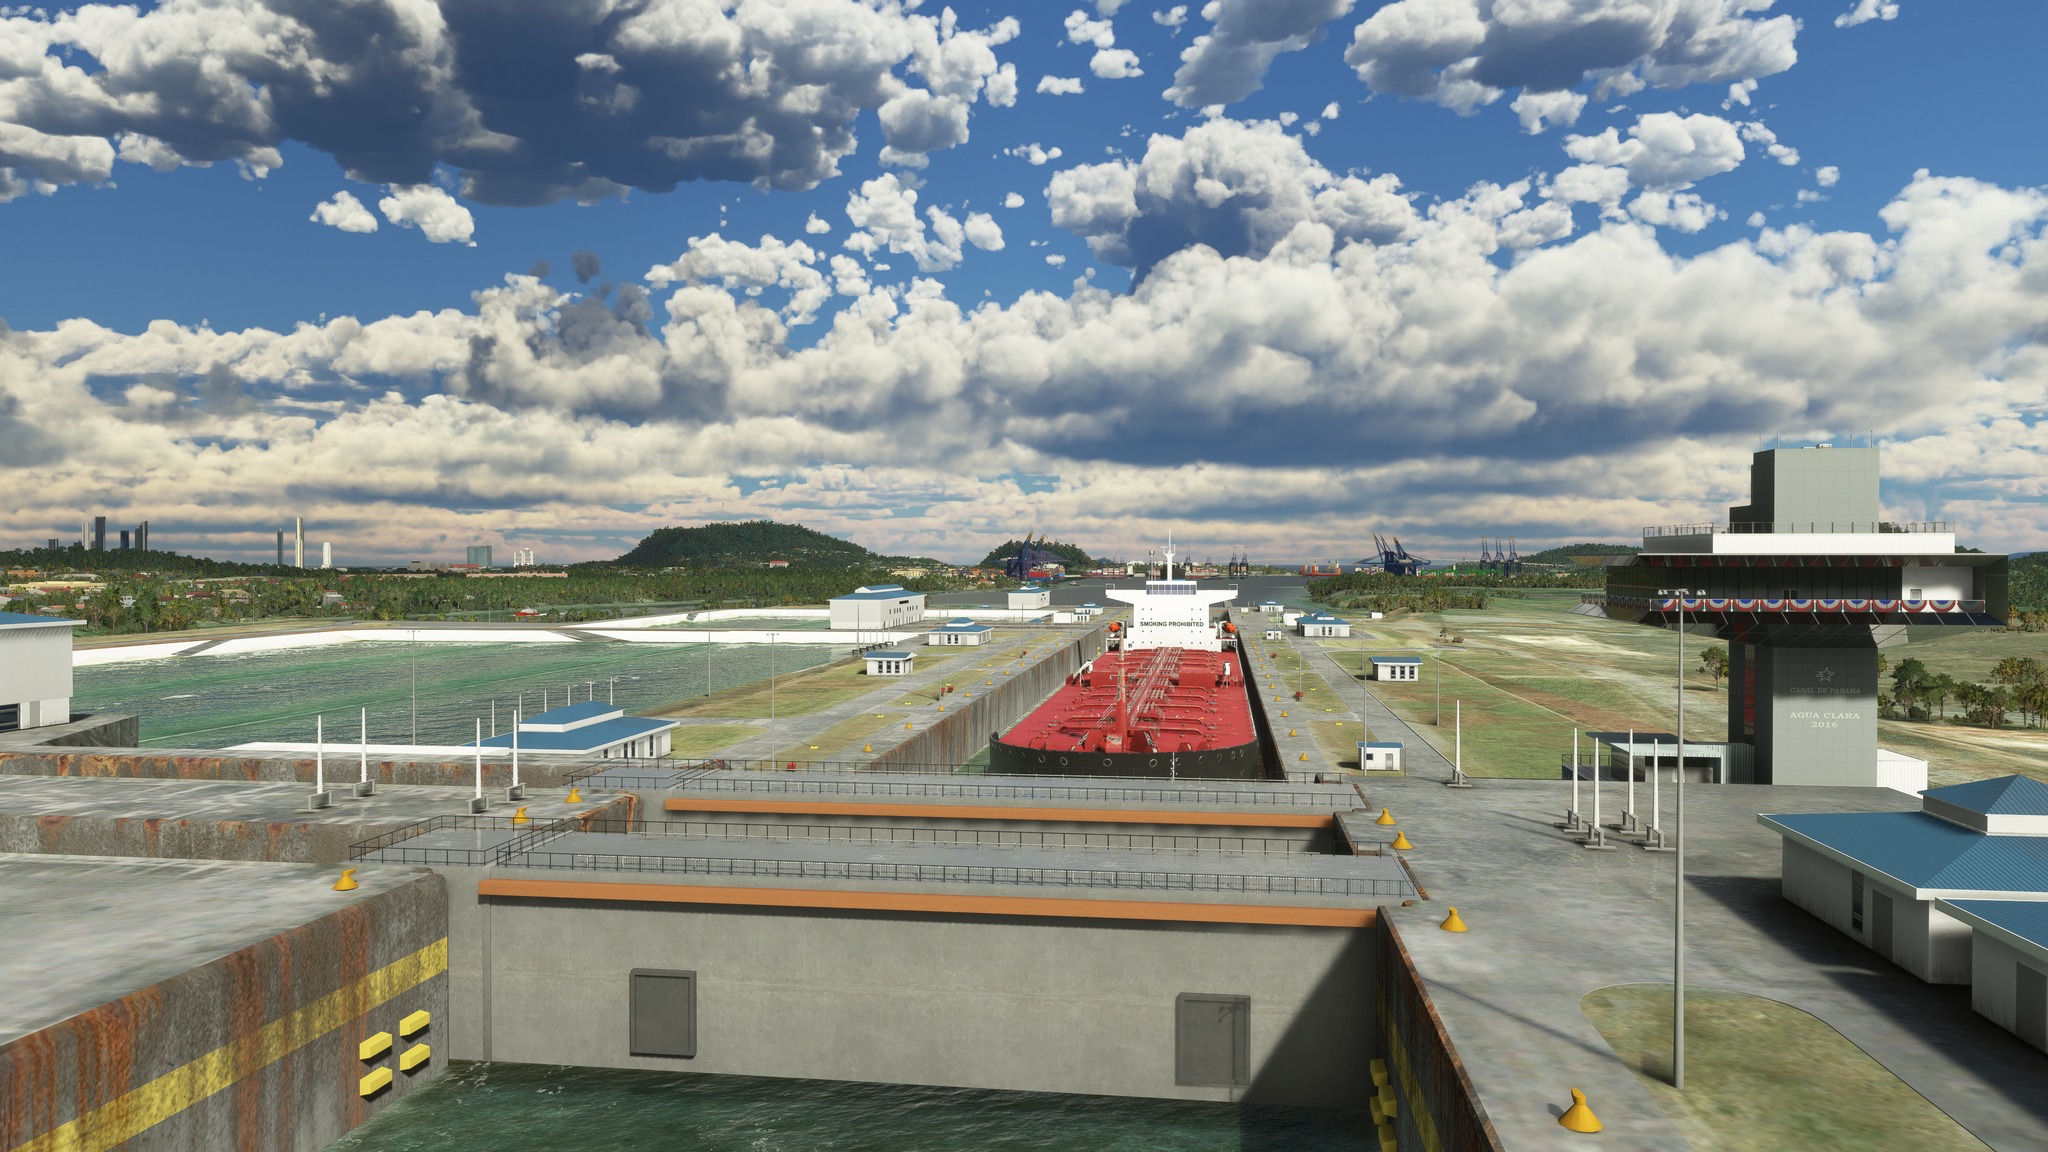 Orbx Releases Panama Landmarks for MSFS - Microsoft Flight Simulator, Orbx